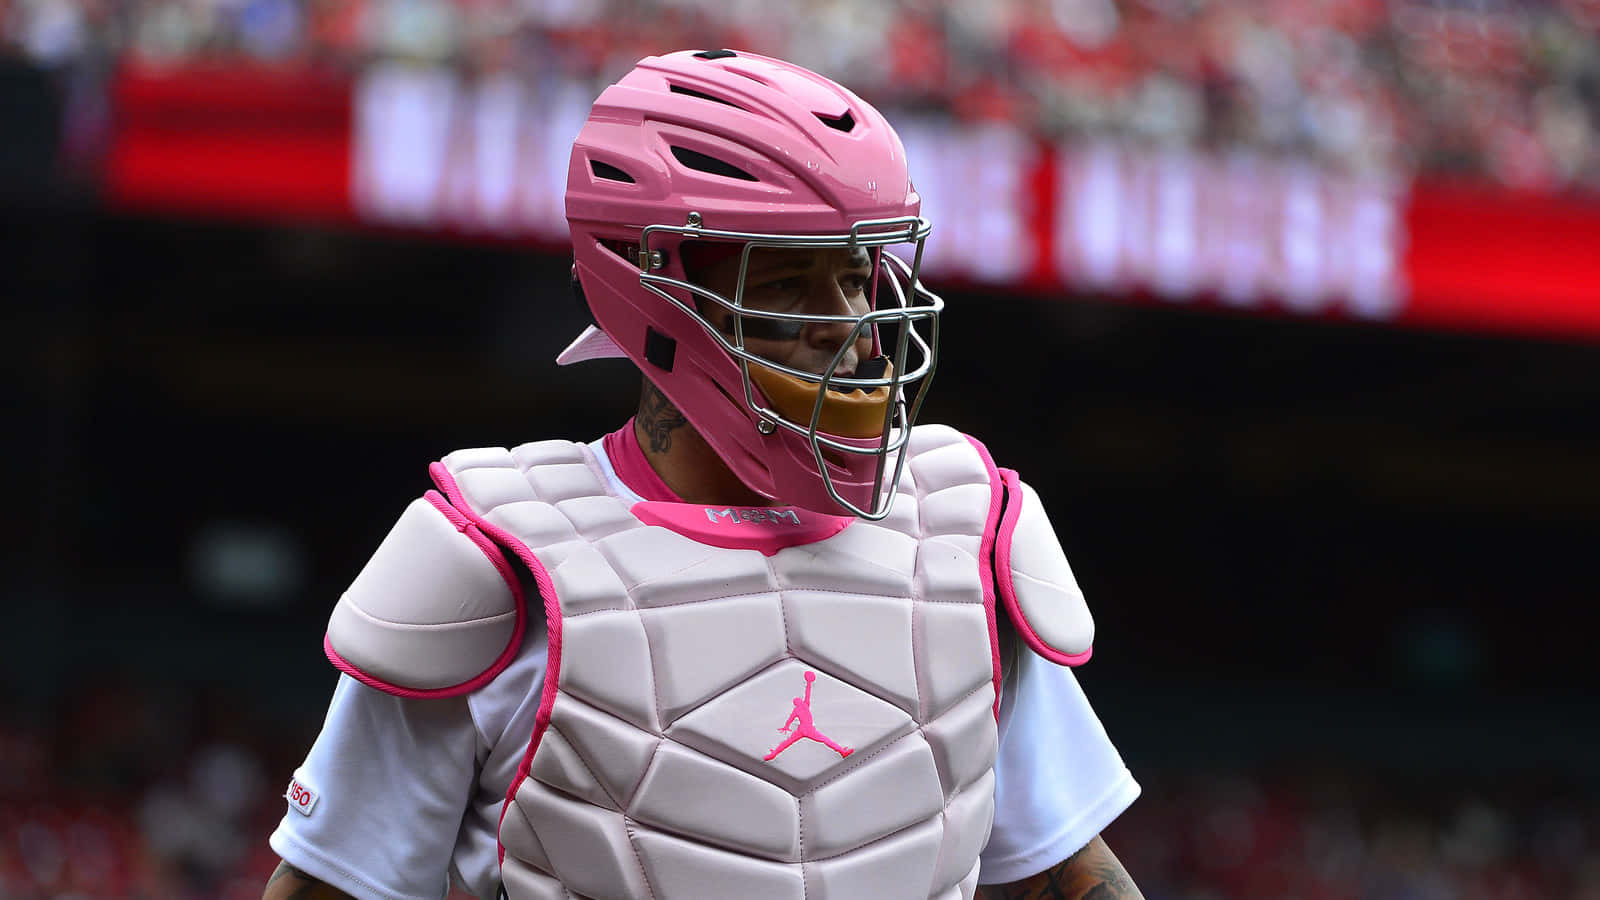 Download A Man In Pink Baseball Gear Is Standing On A Field Wallpaper